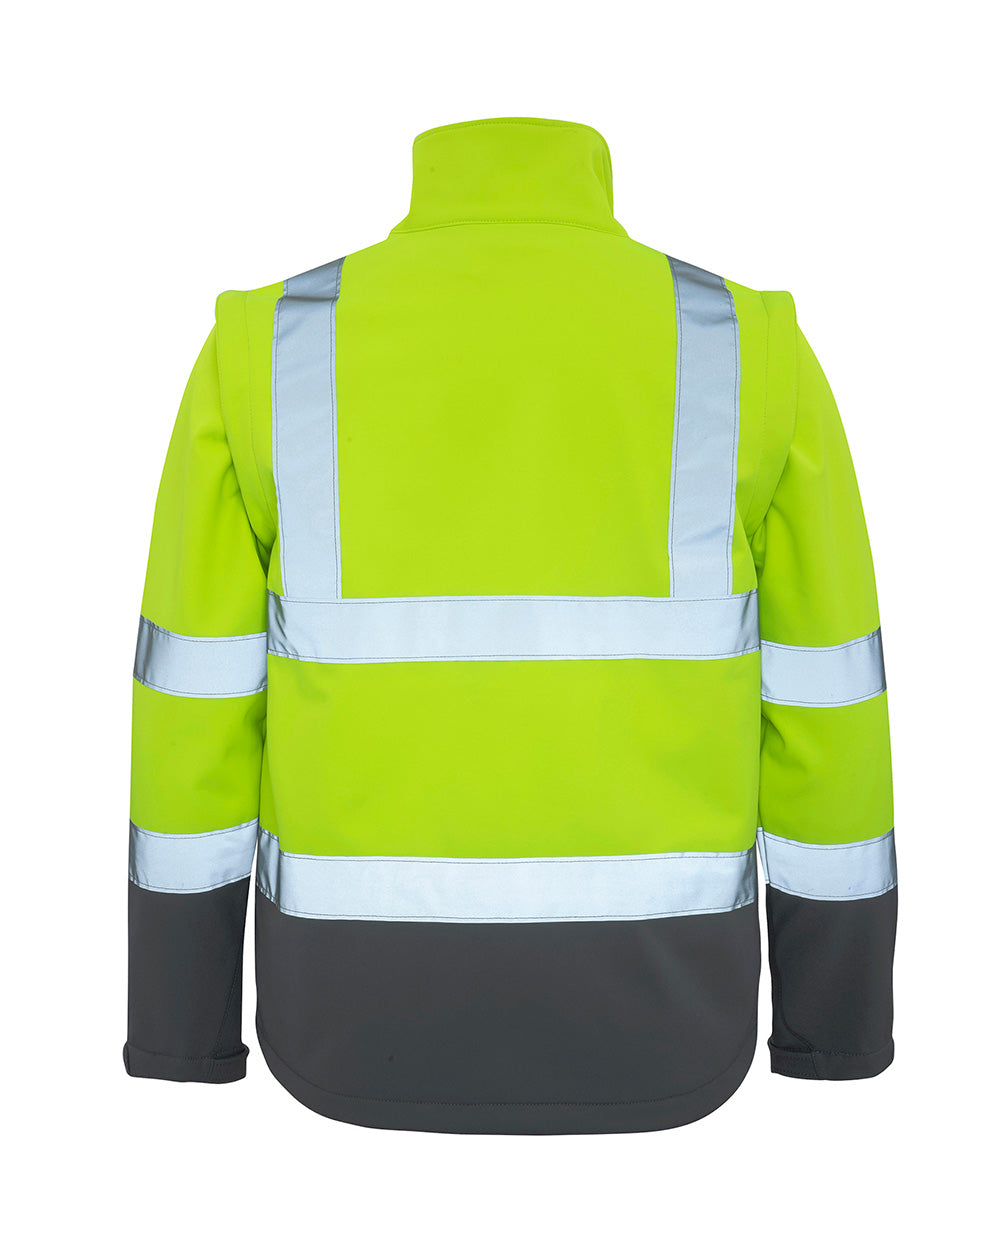 Landy Softshell Jacket in Fluoro Yellow & Charcoal